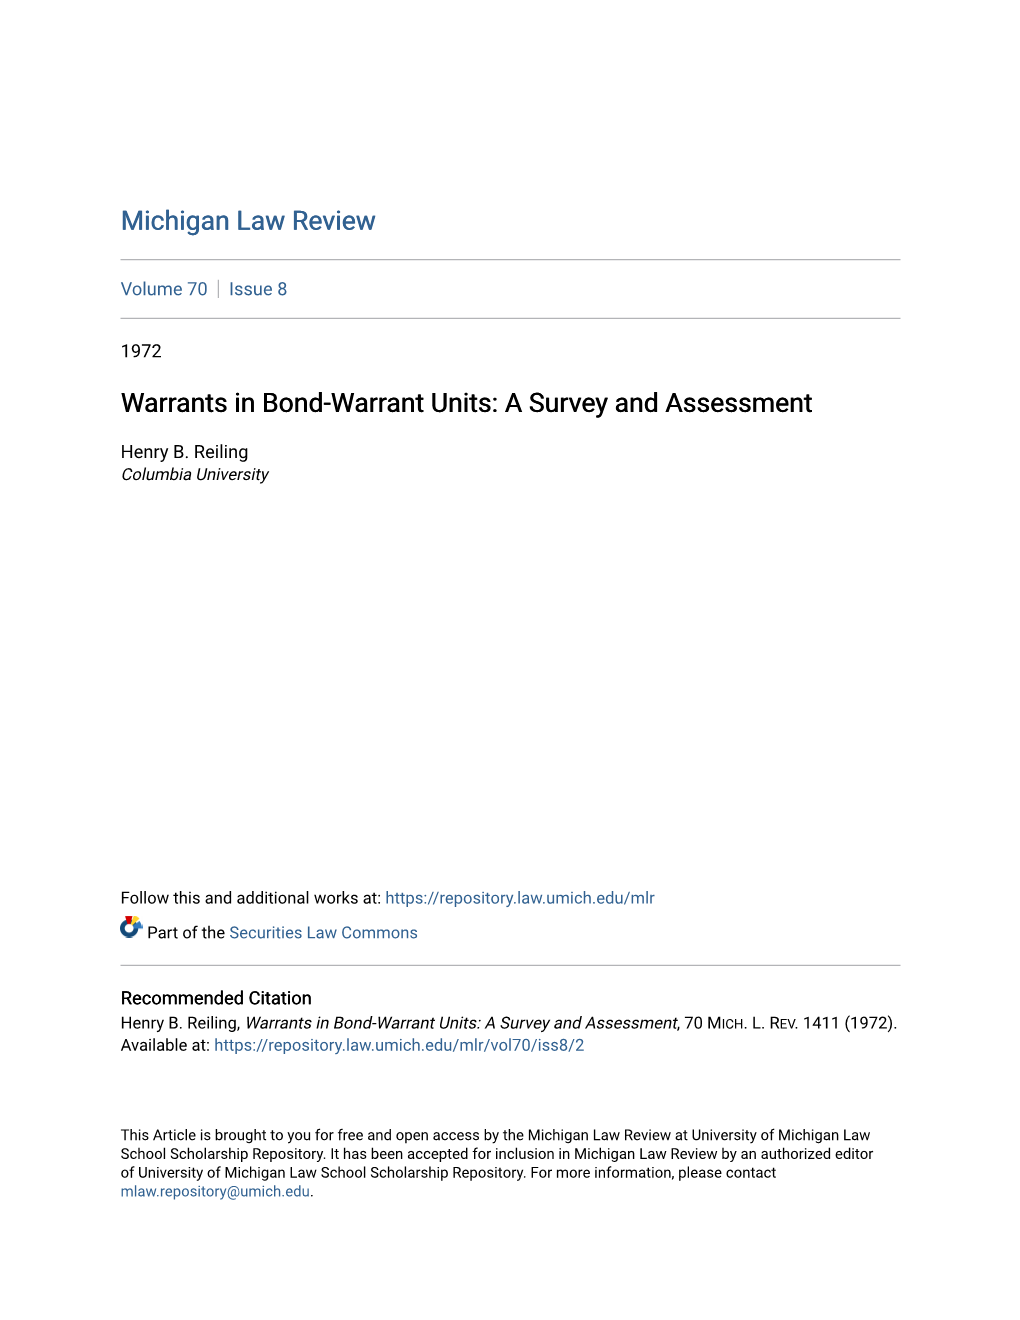 Warrants in Bond-Warrant Units: a Survey and Assessment